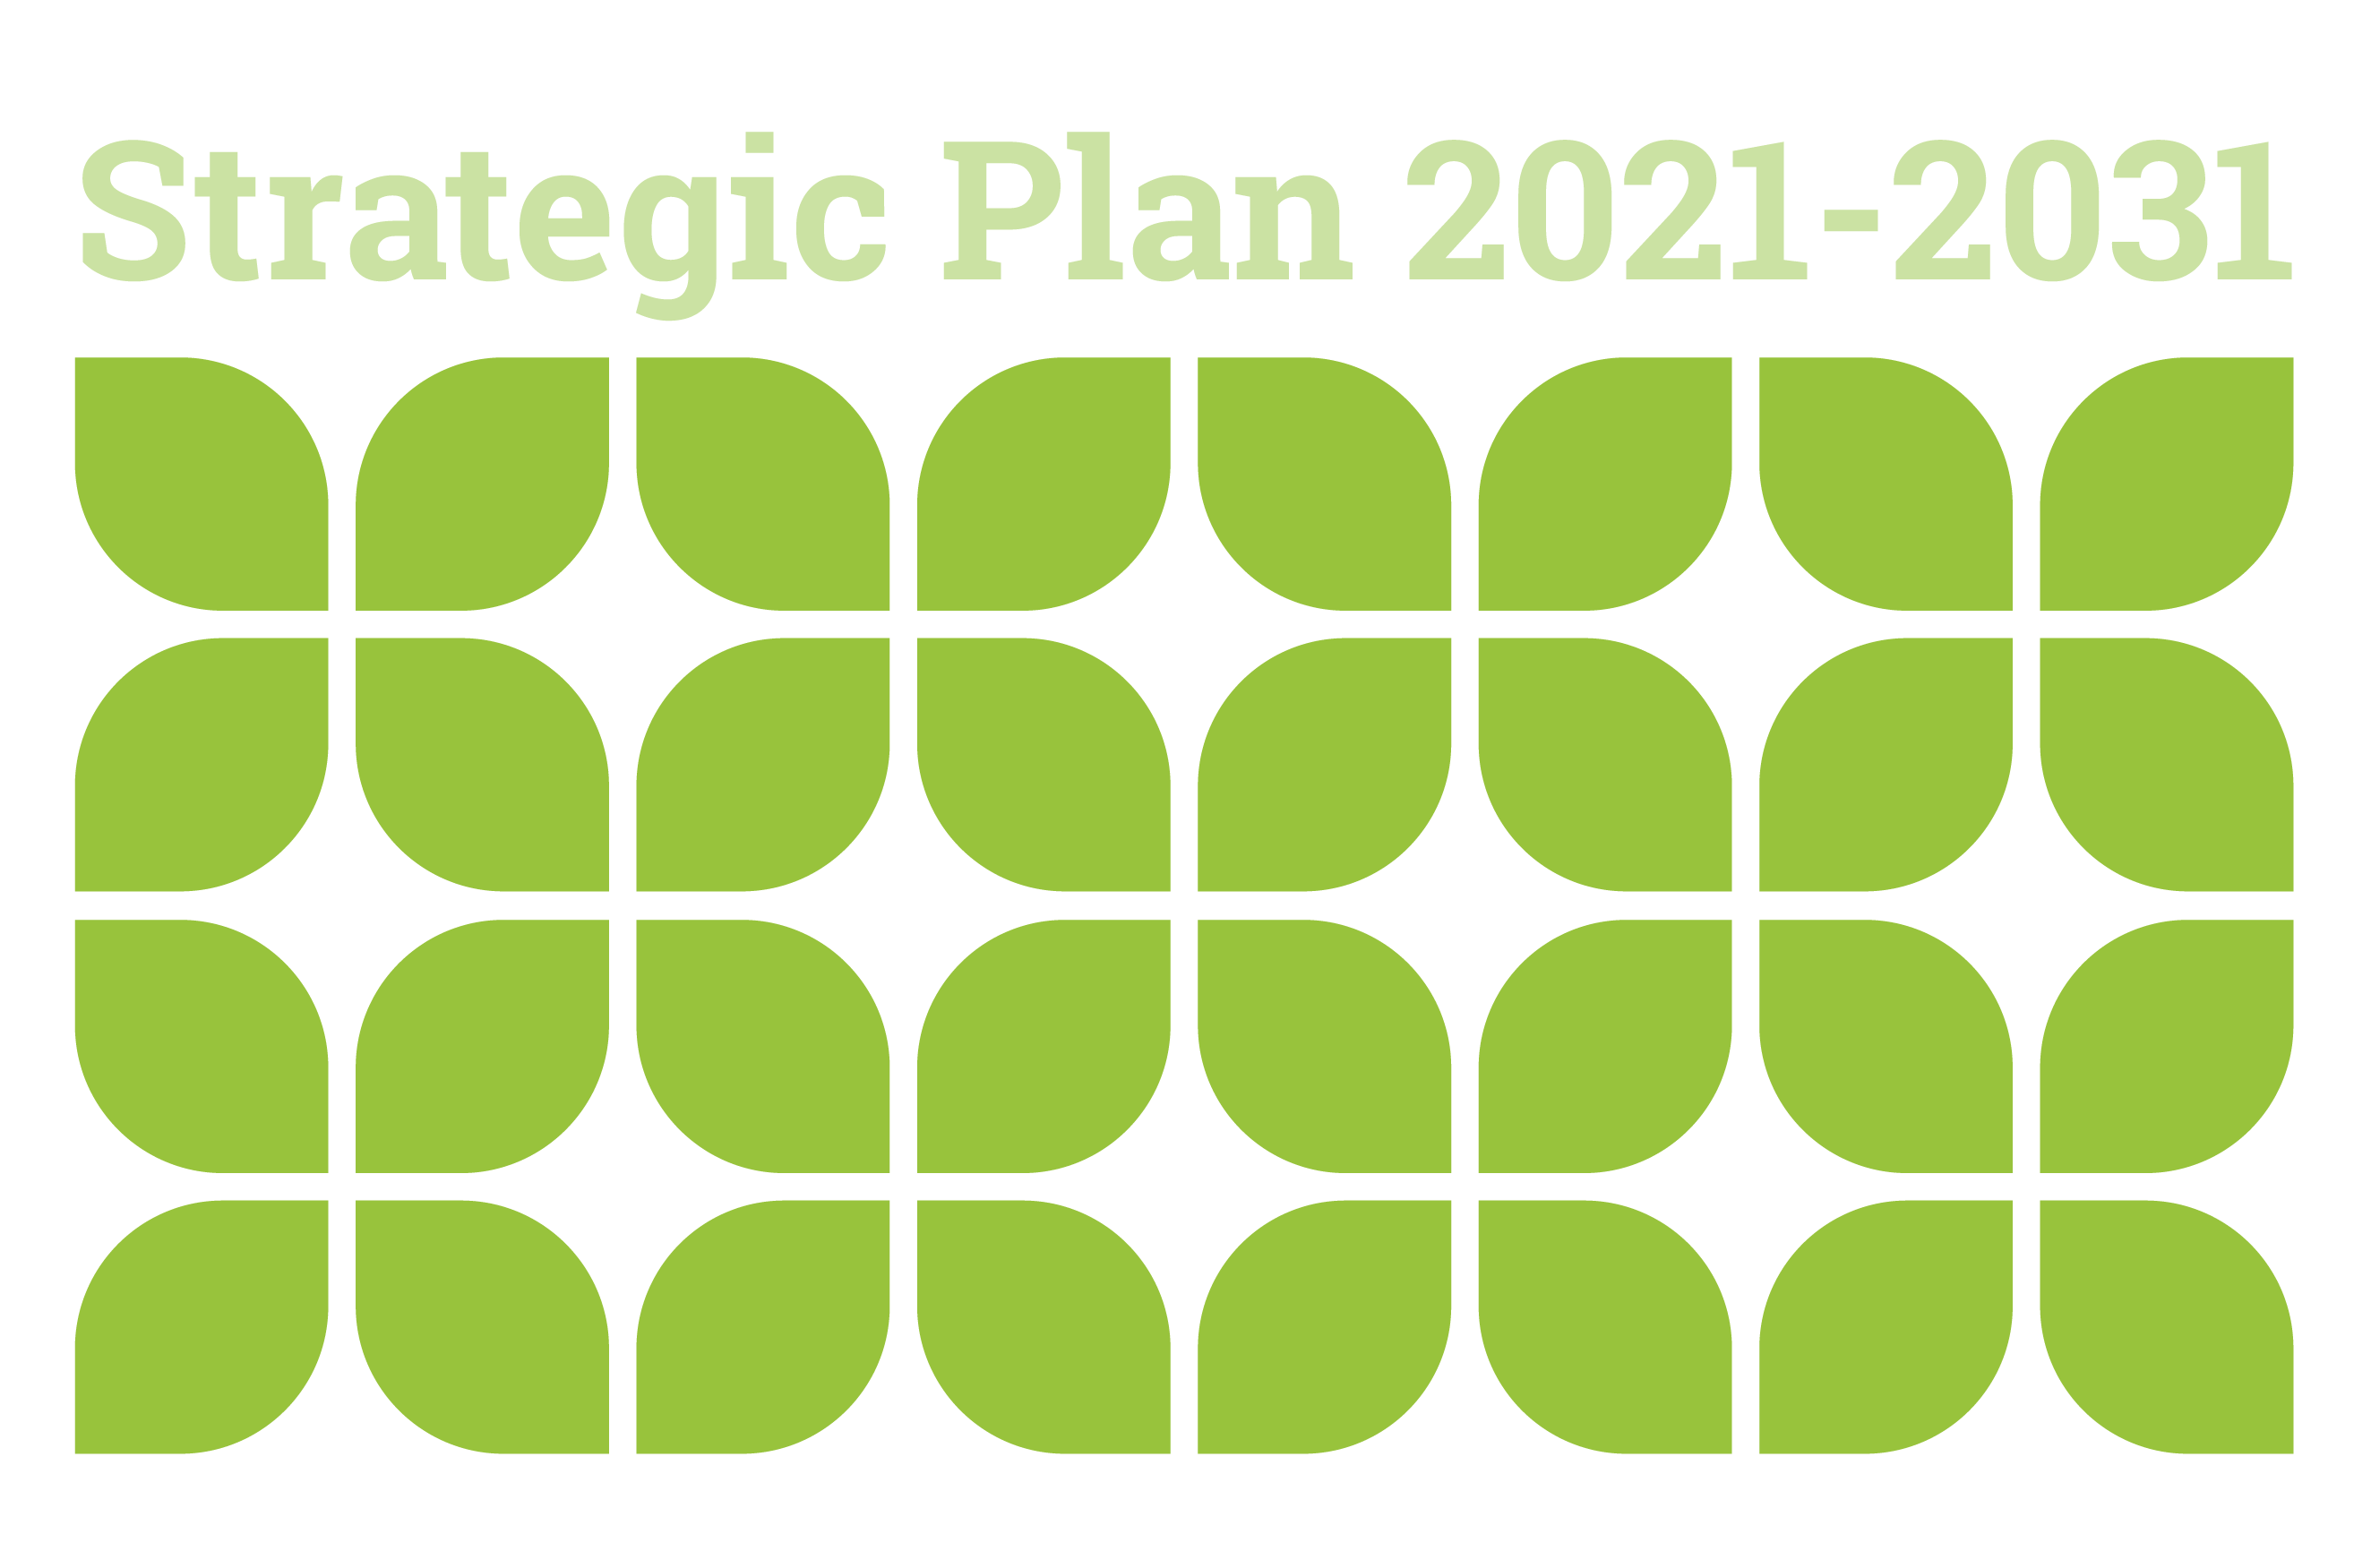 Strategic Plan 2021-2031